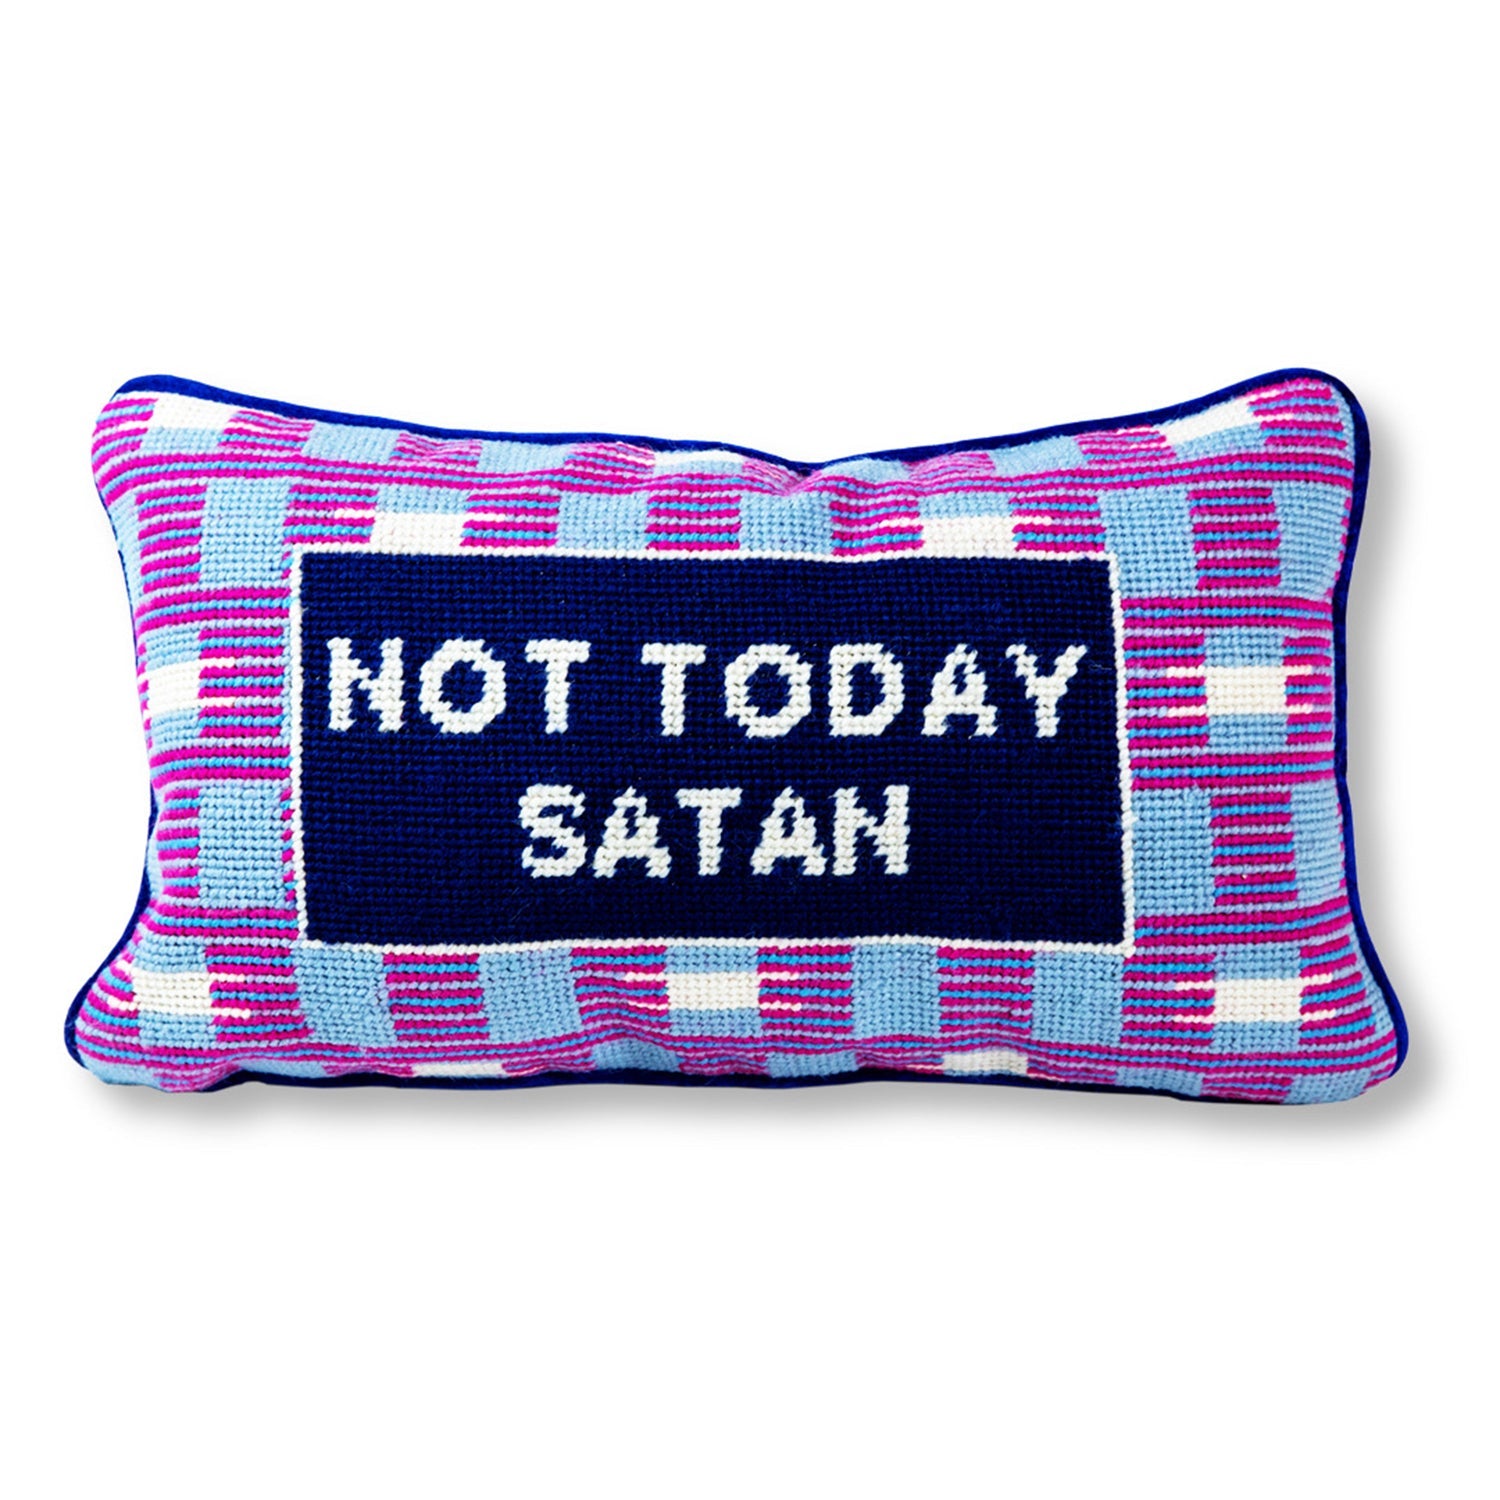 Not Today Satan needle point pillow